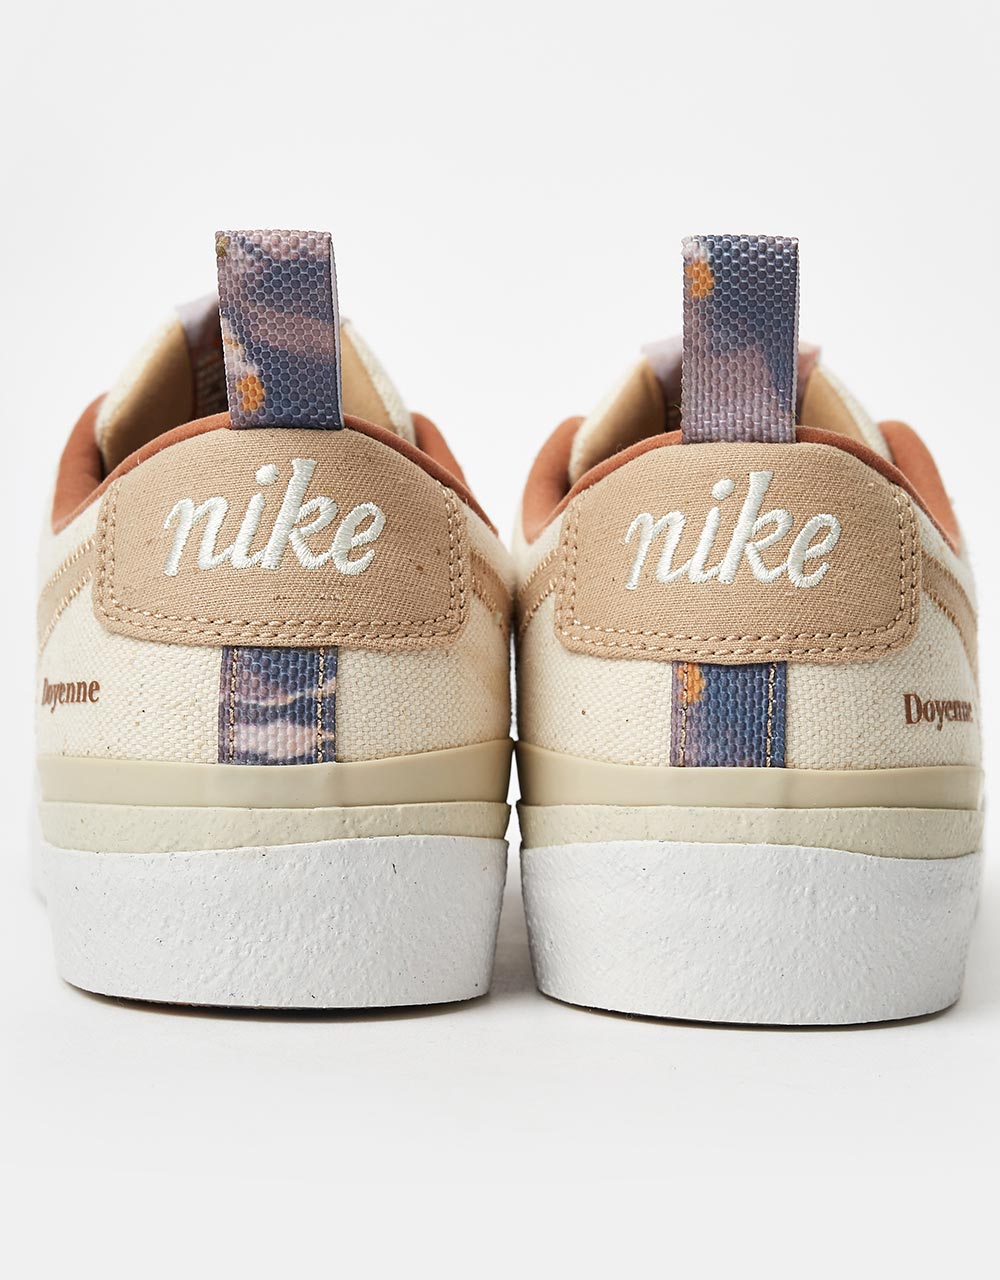 Nike SB x Doyenne Blazer Low QS Skate Shoes - Coconut Milk/Rattan-Limestone-Rattan